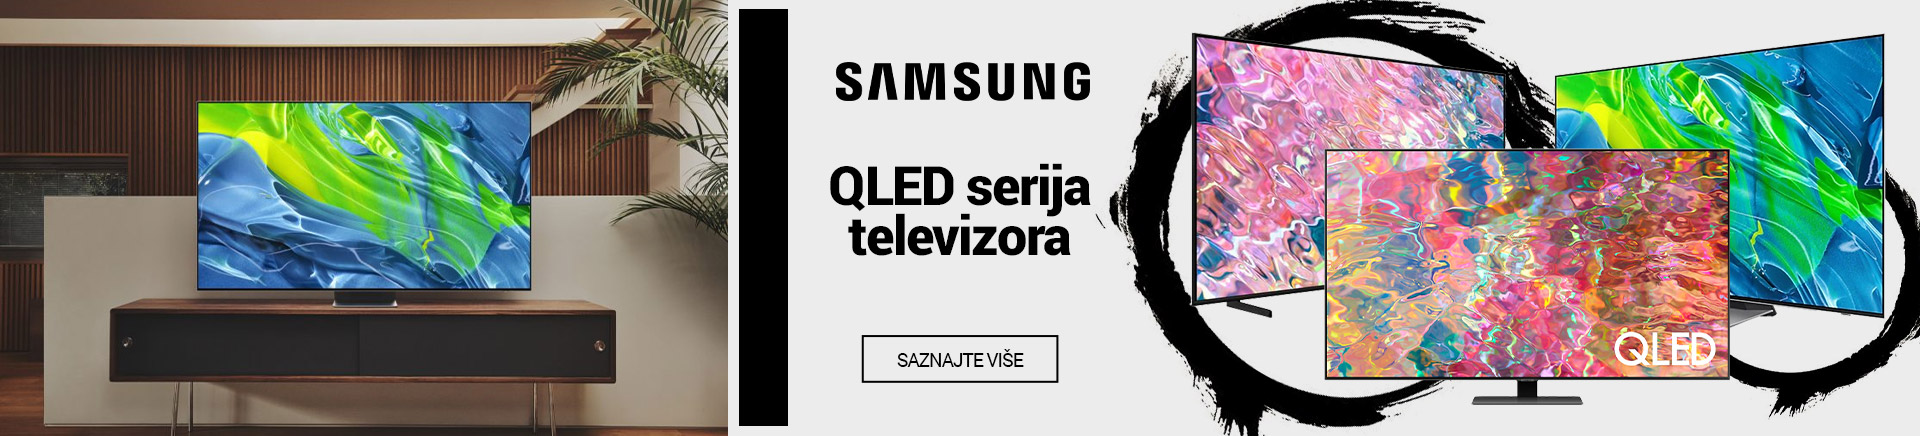 HR Samsung QLED serija televizora TV 2 MOBILE 380 X 436.jpg